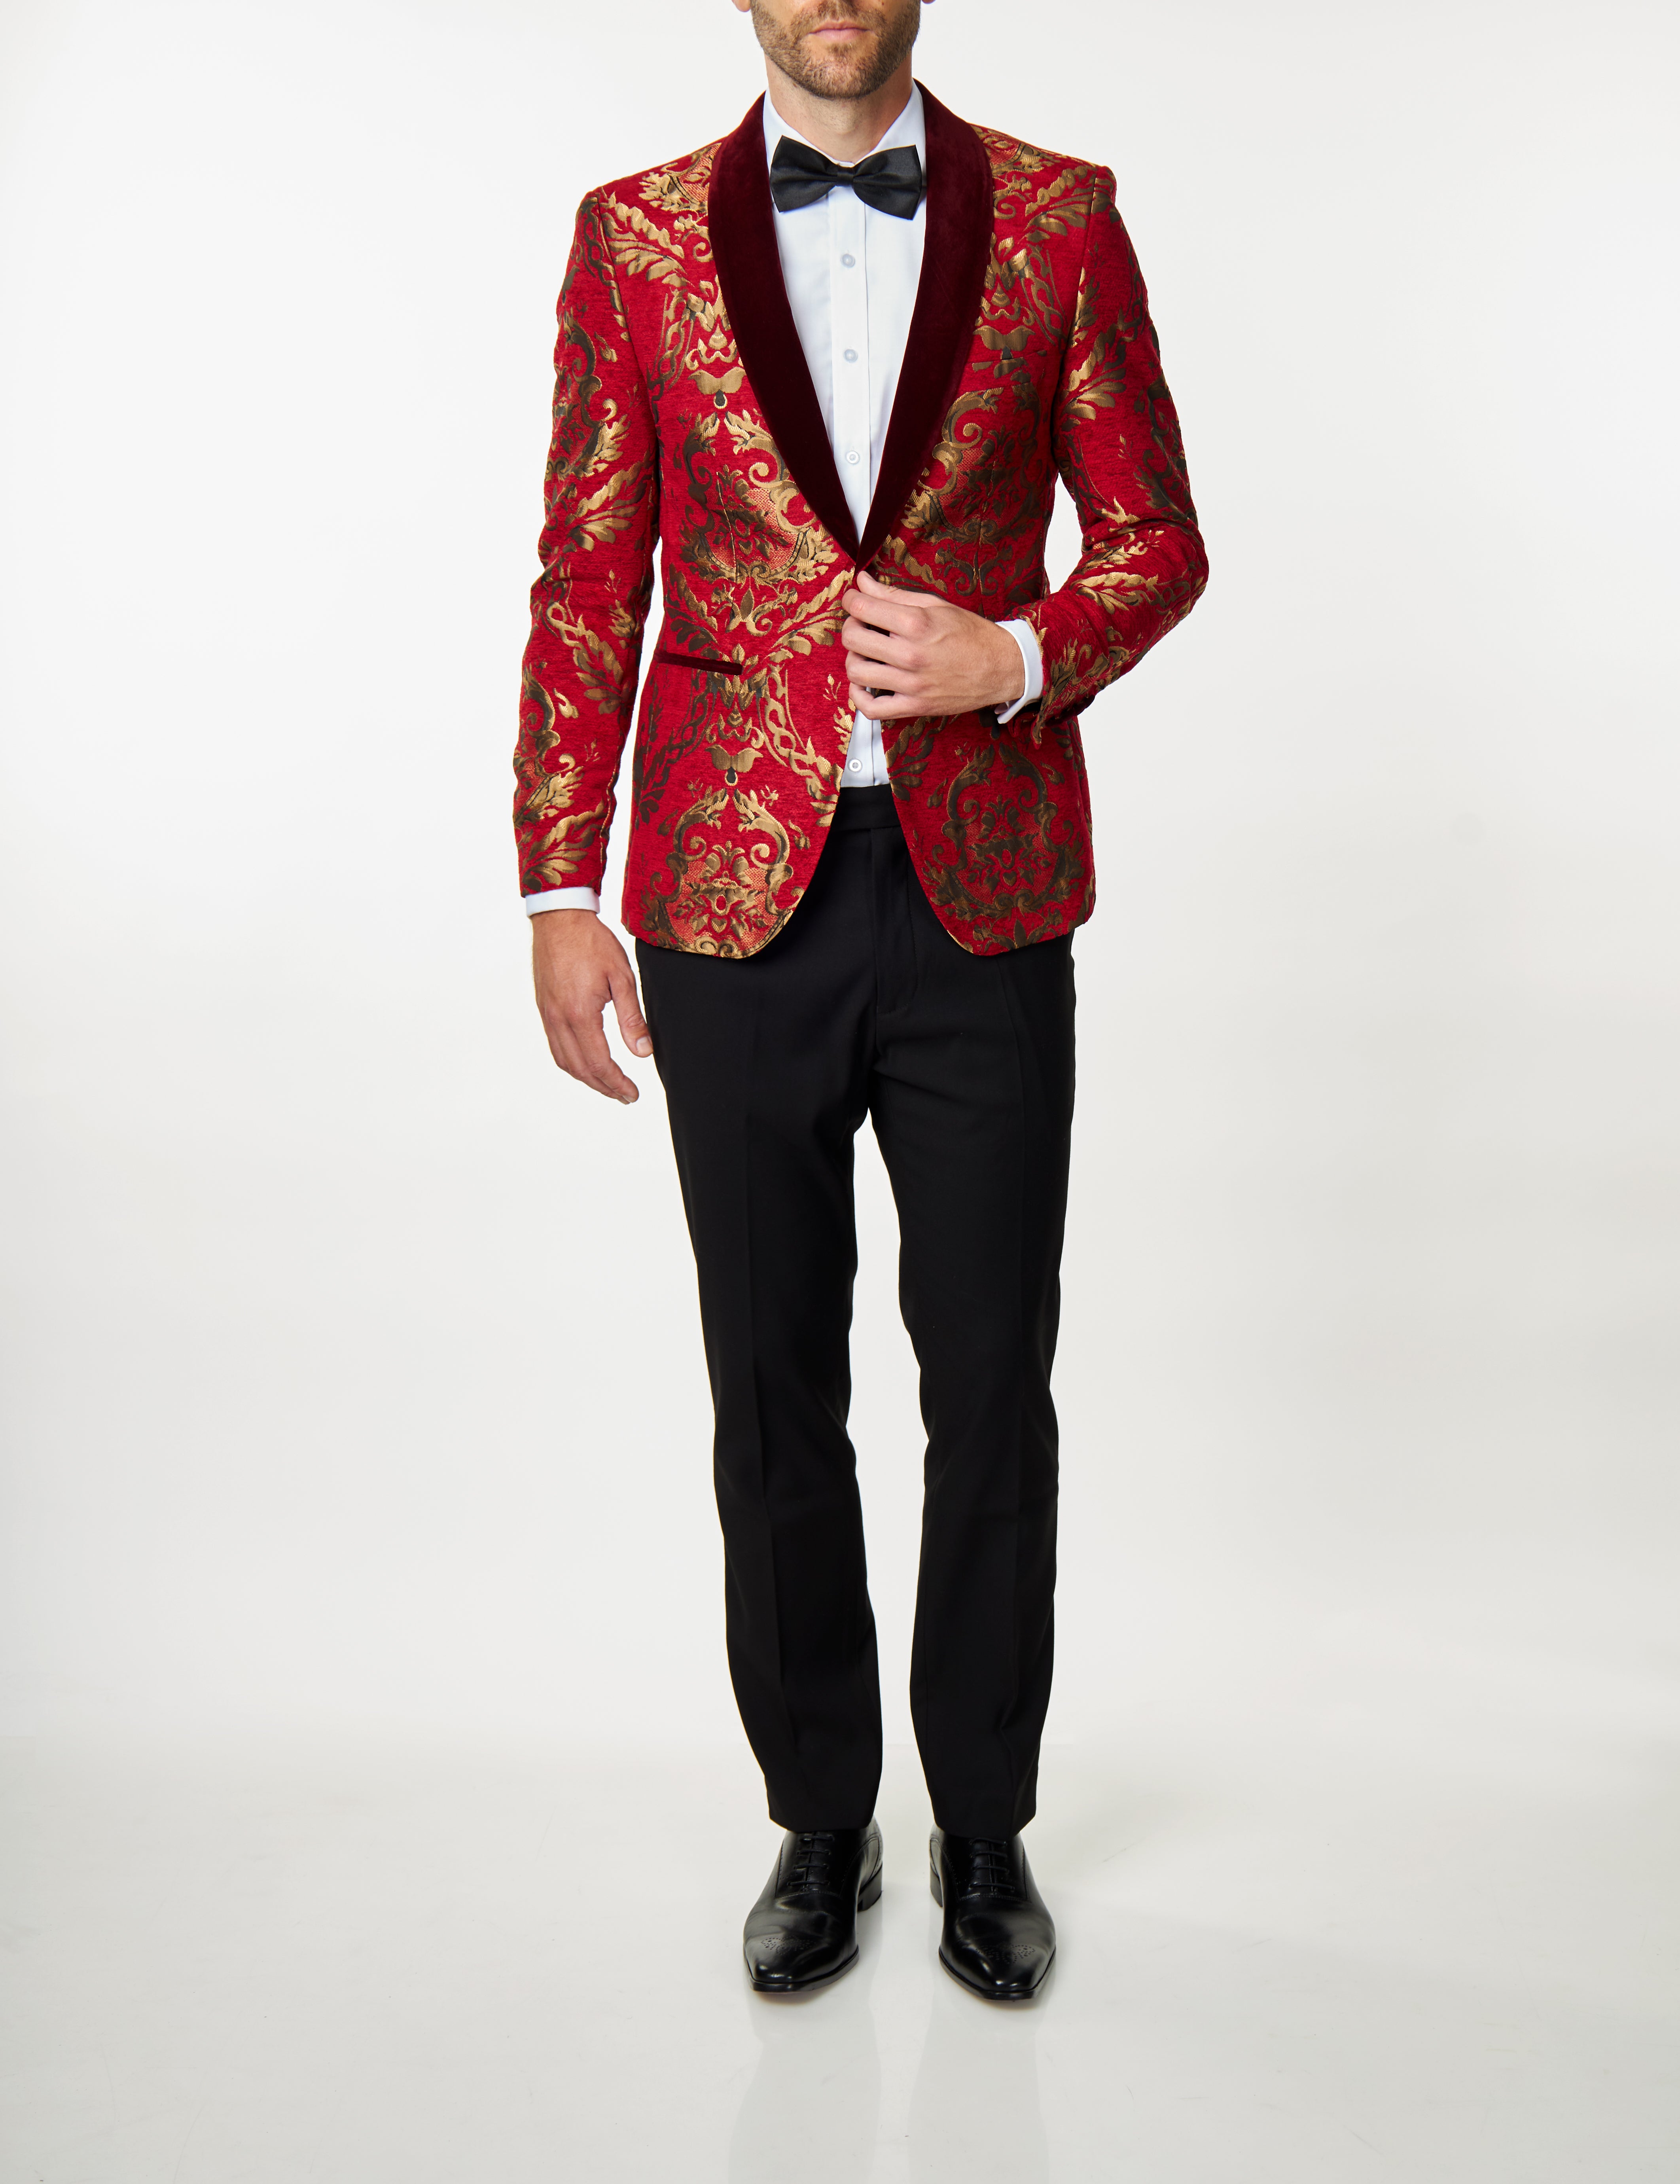 Gold Brocade Paisley on Crimson Red Jacquard Jacket